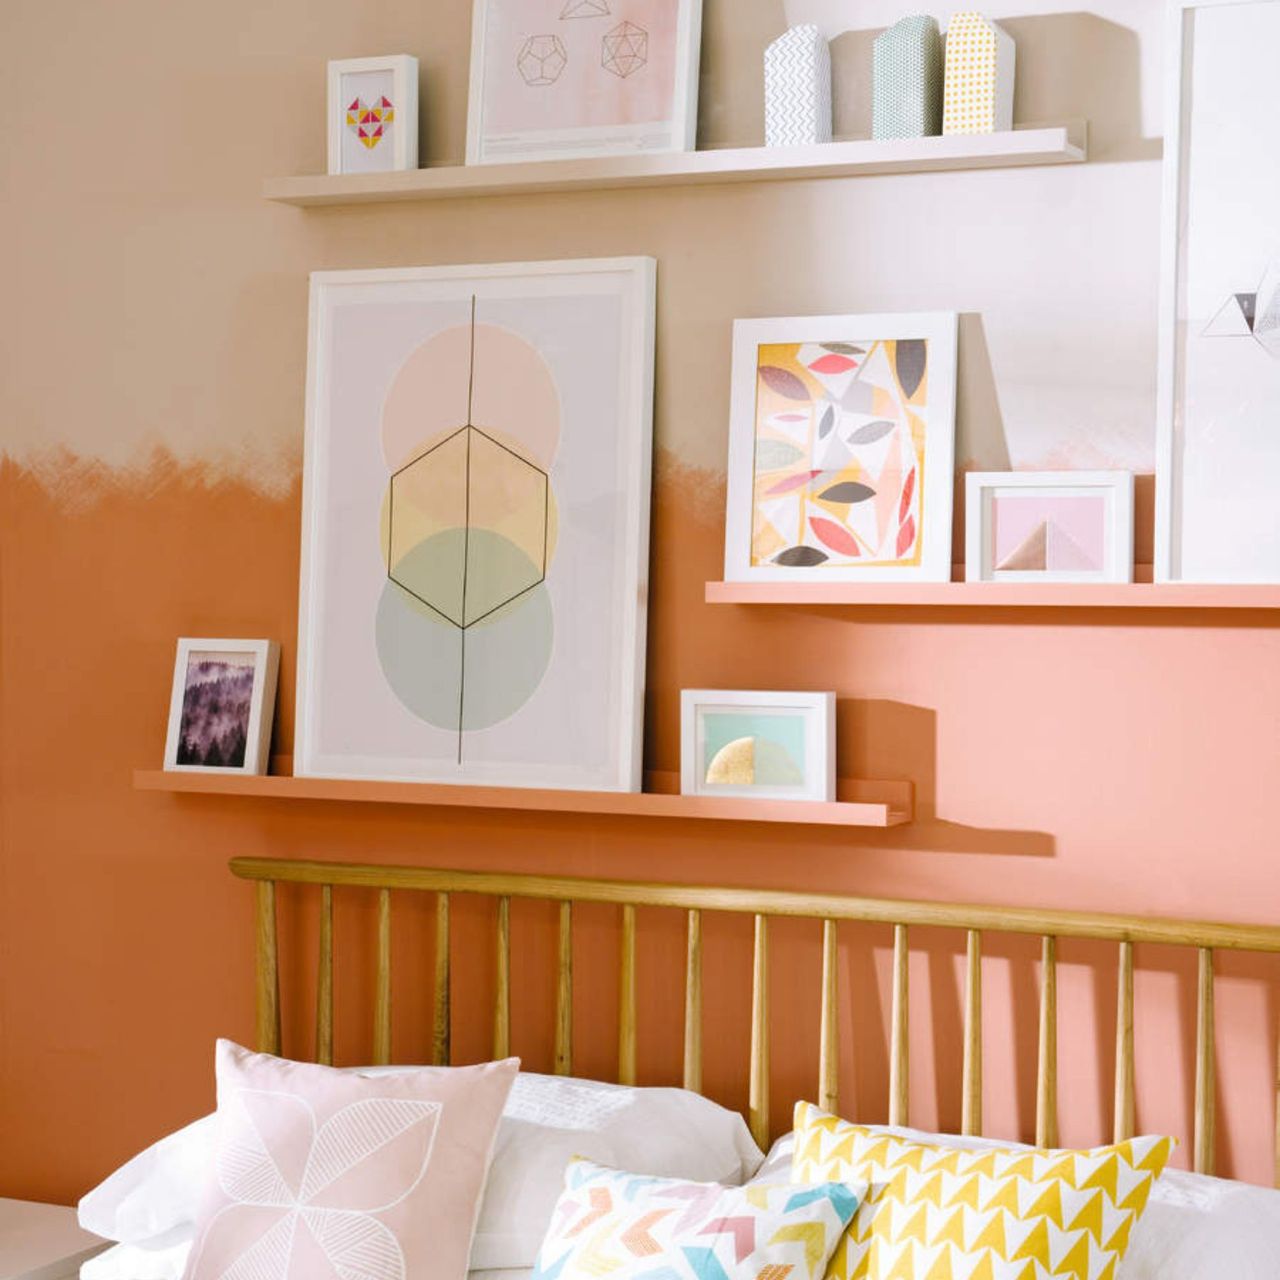 Teenage bedroom ideas: cool looks they'll love | Ideal Home